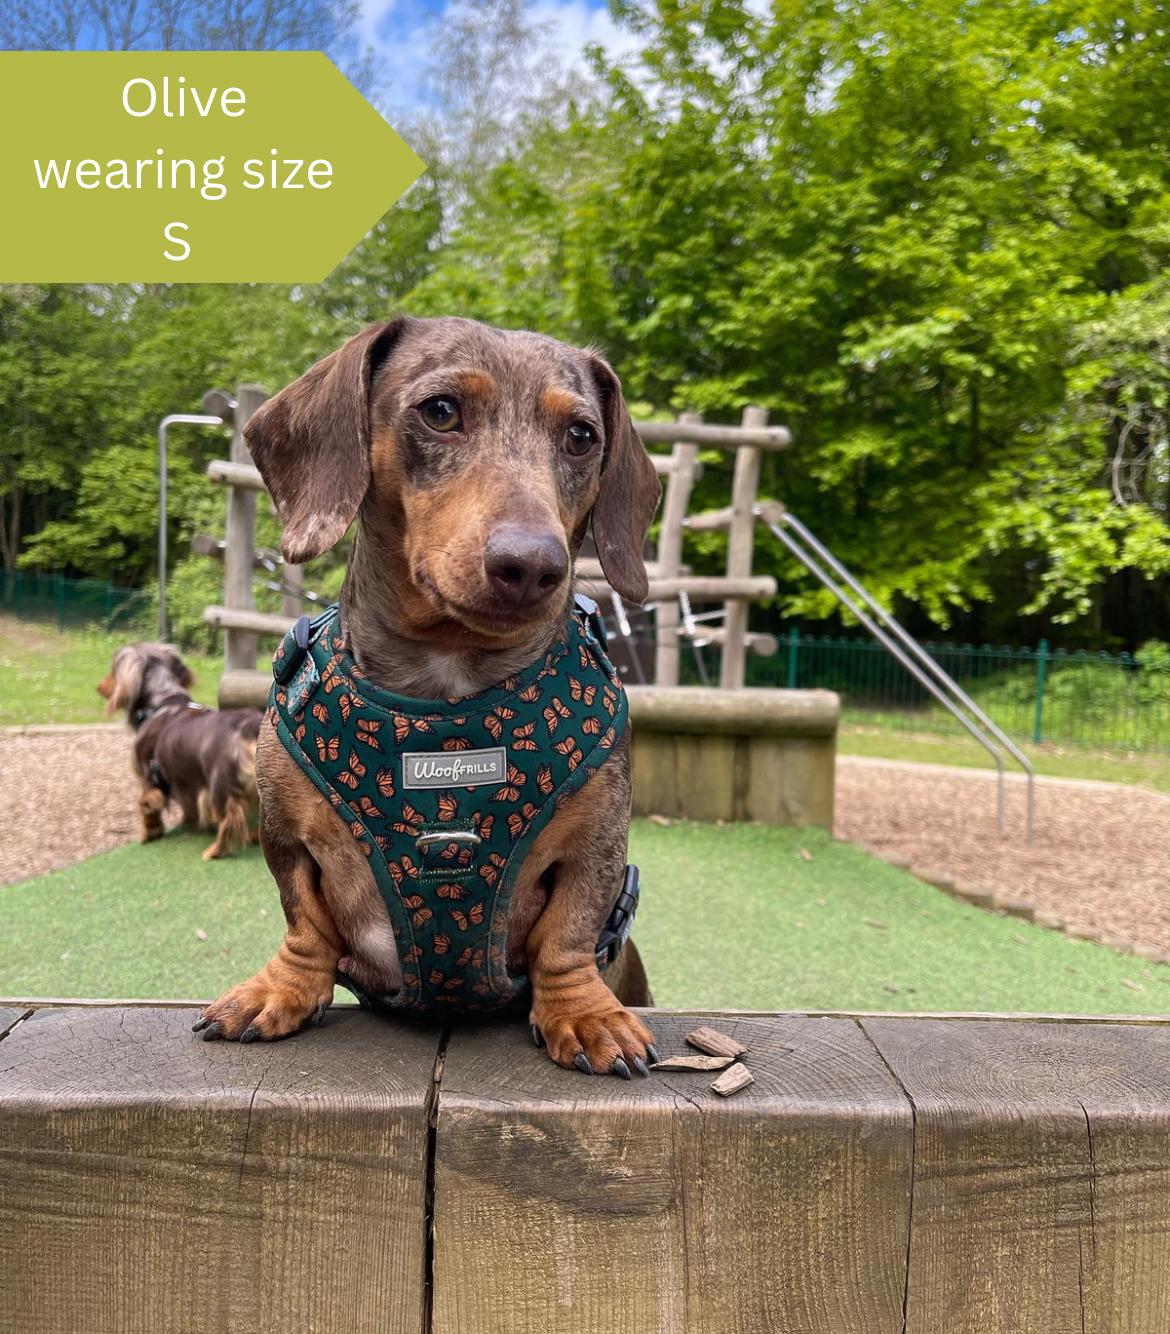 Dachshund wearing a adjustable dog harness